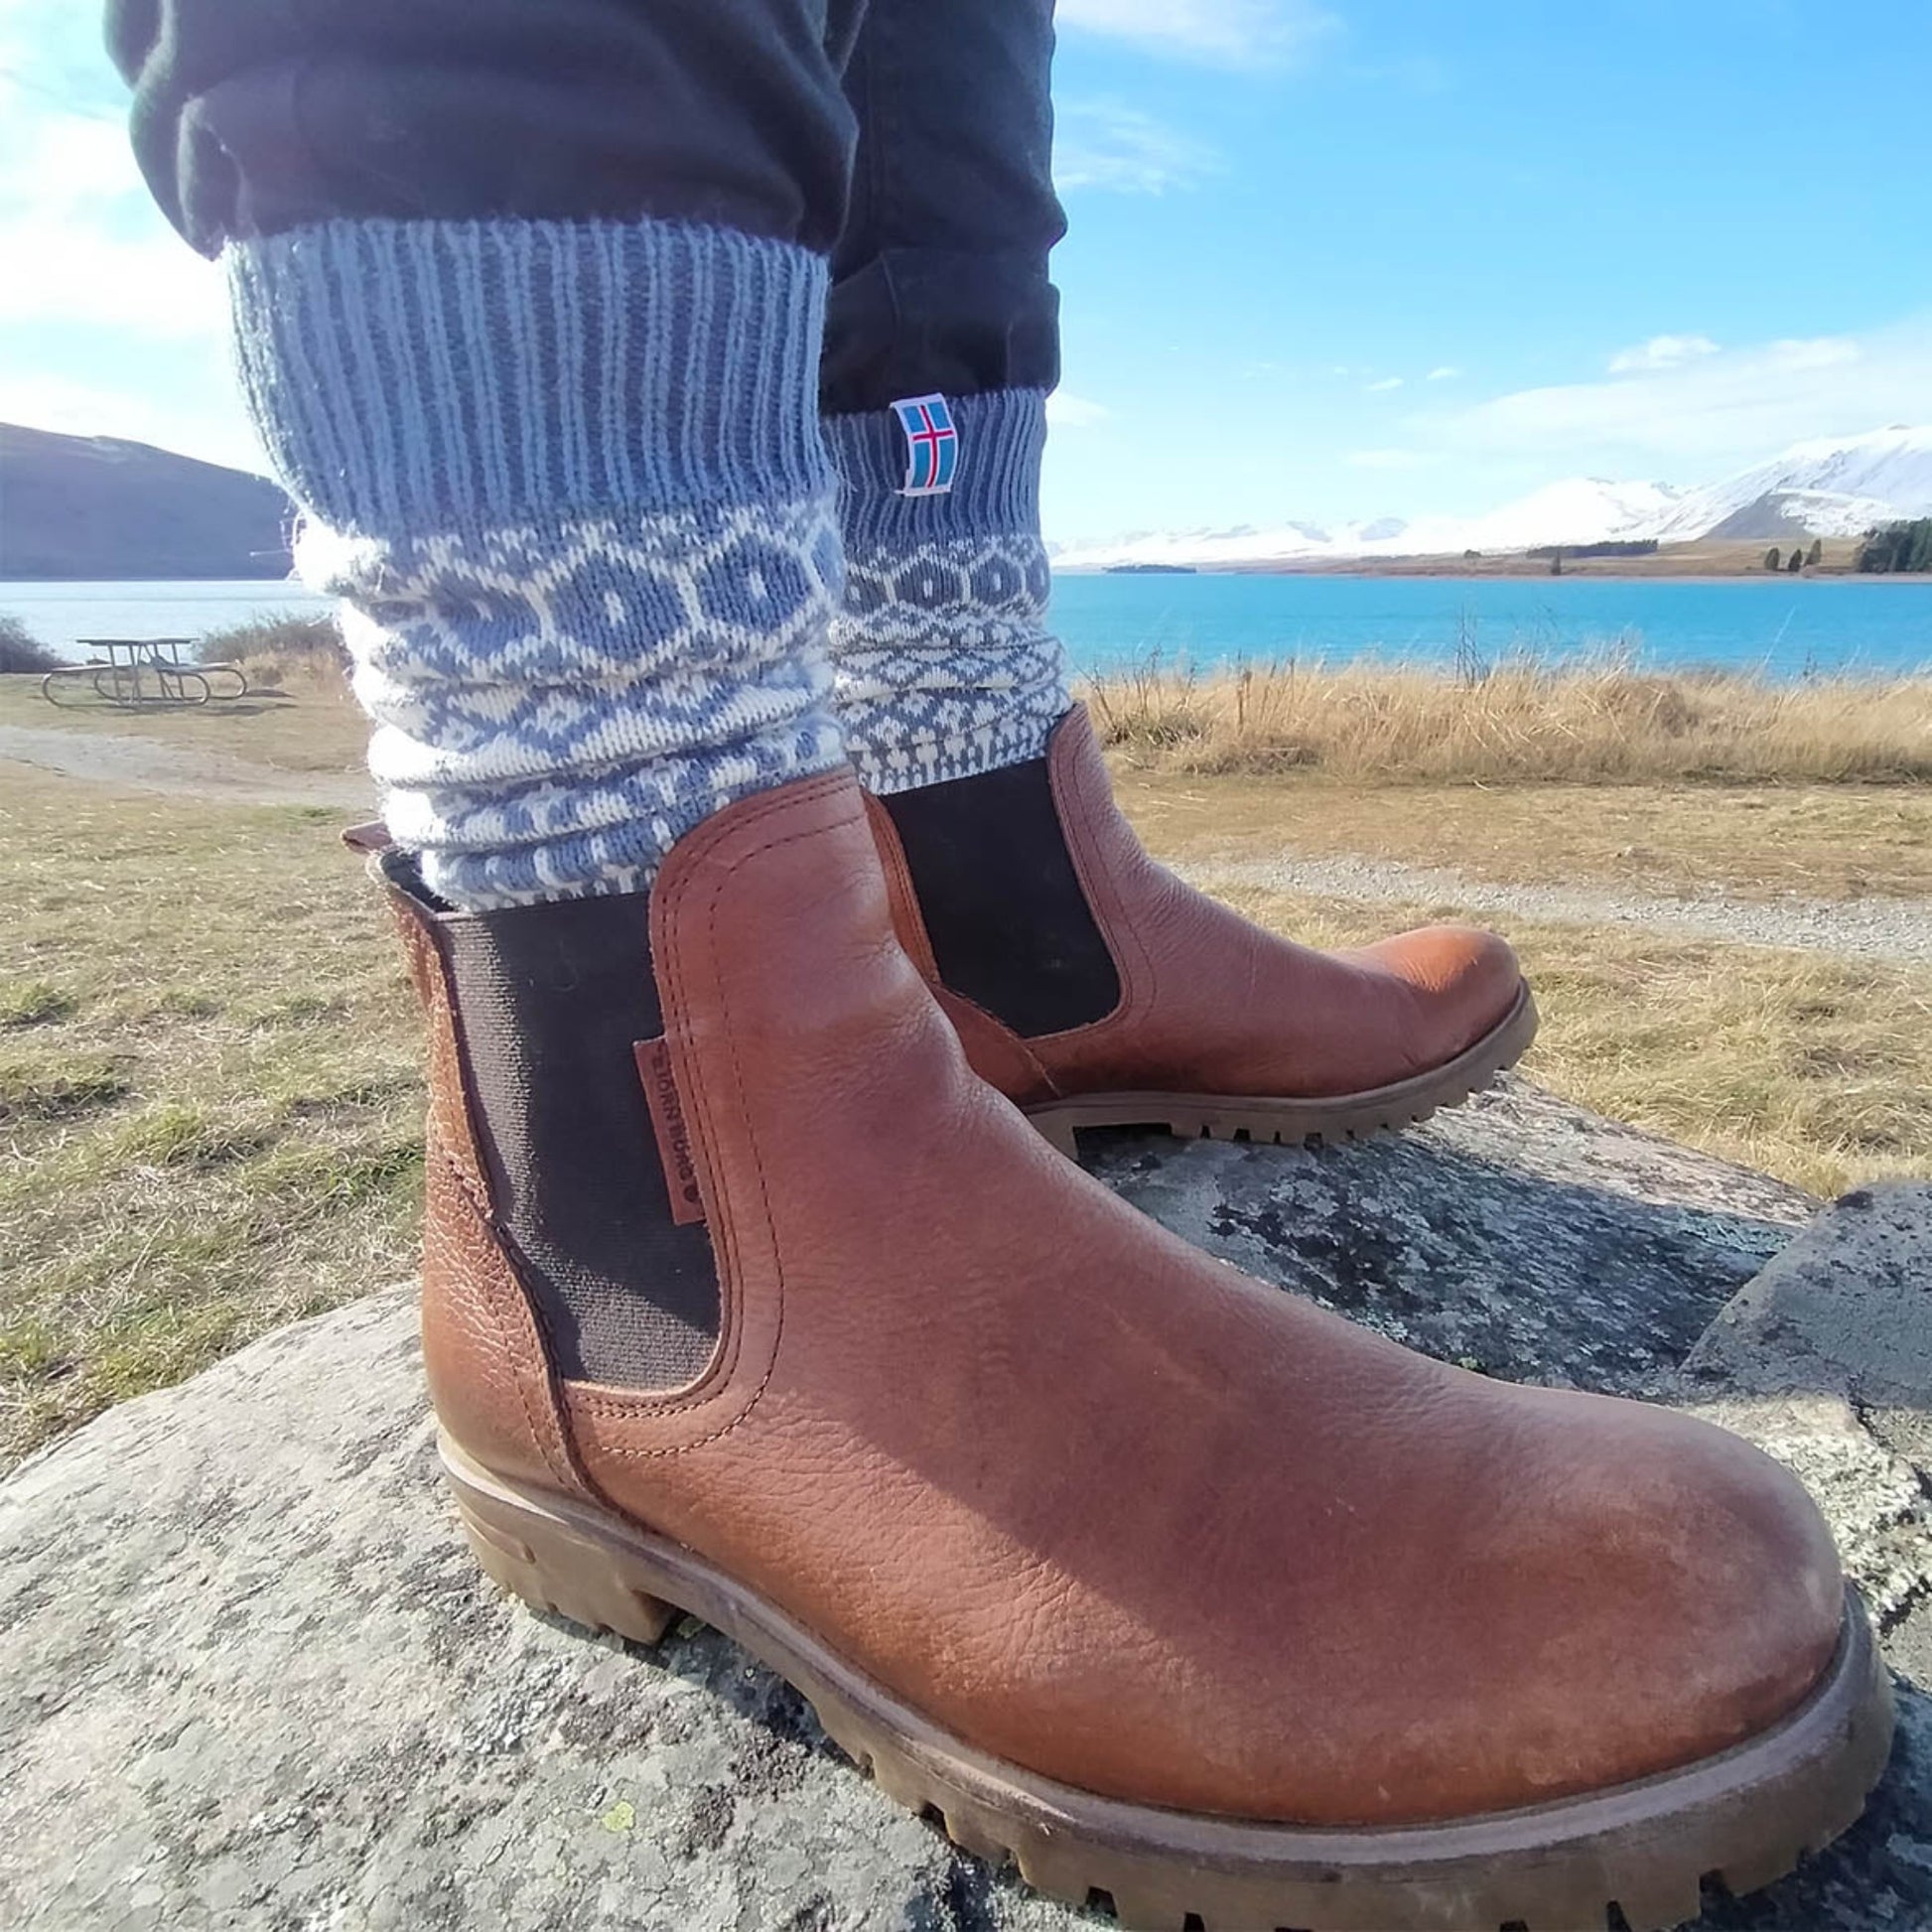 NORWOOL Wool Socks Iceland, Blue/White (6583972659265)